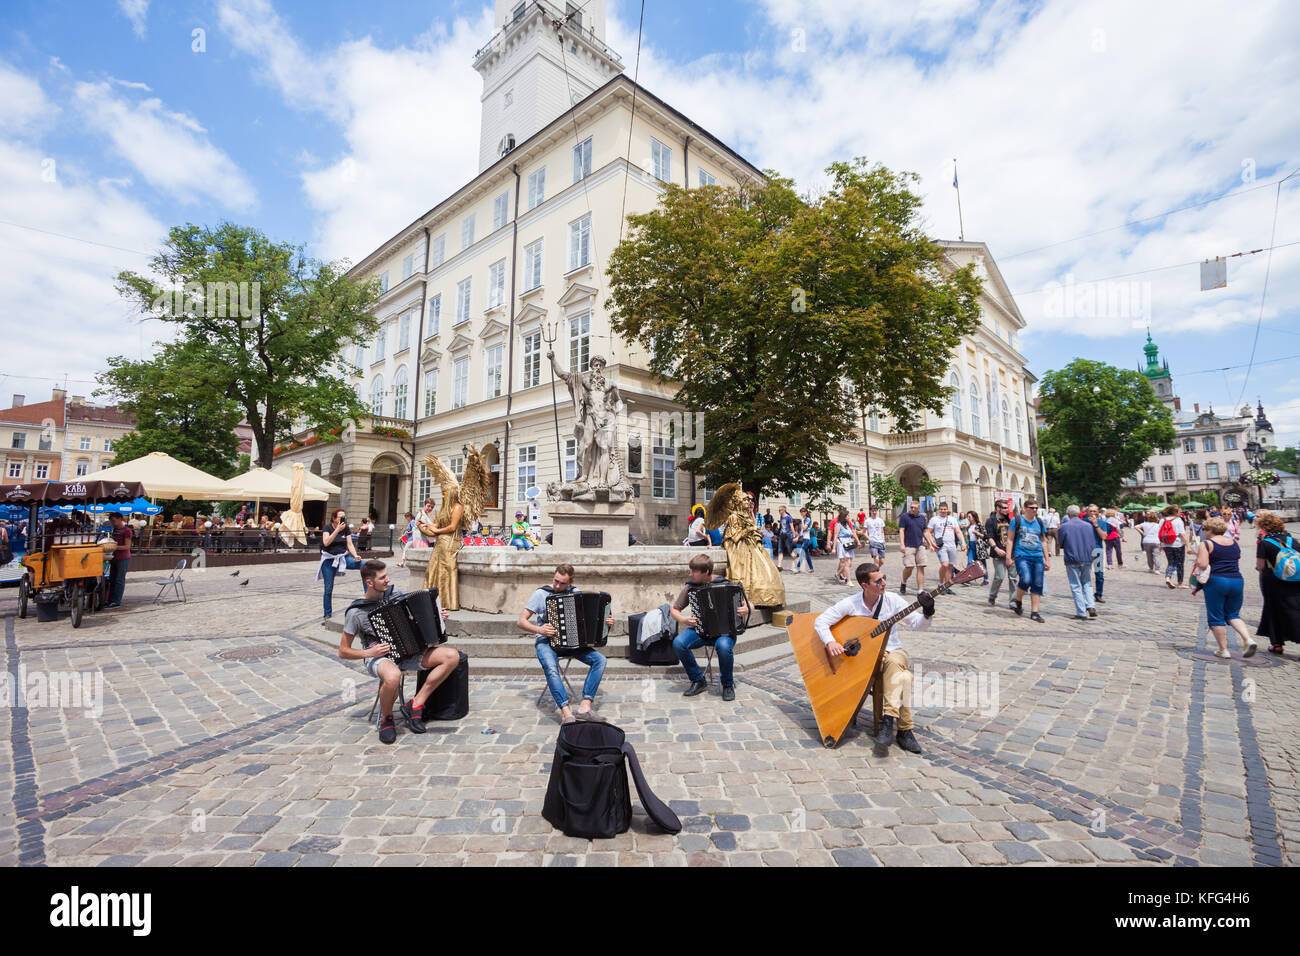 LVIV, UKRAINE - JUNE 3: Street musicians perform Bach on accordions and a balalaika contrabass in Rynok Square, Lviv, Ukraine on 3 June 2017. Stock Photo